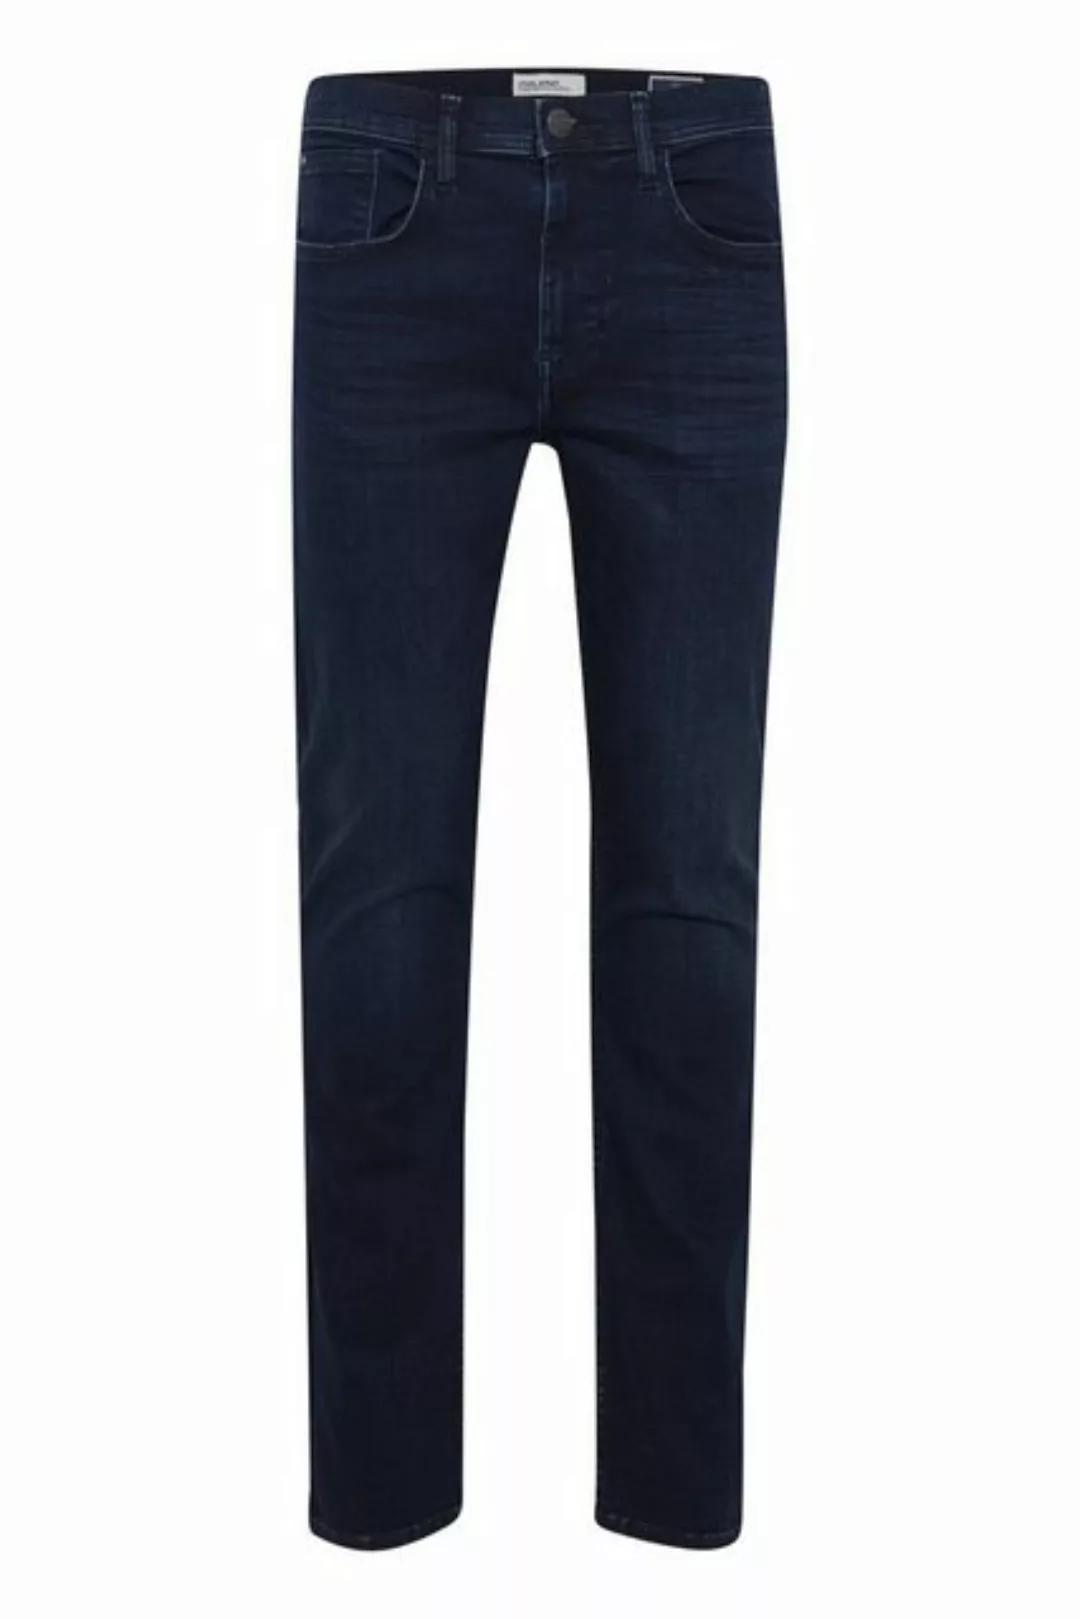 Blend 5-Pocket-Jeans BLEND JEANS JET denim deep darkblue 20707721.201325 - günstig online kaufen